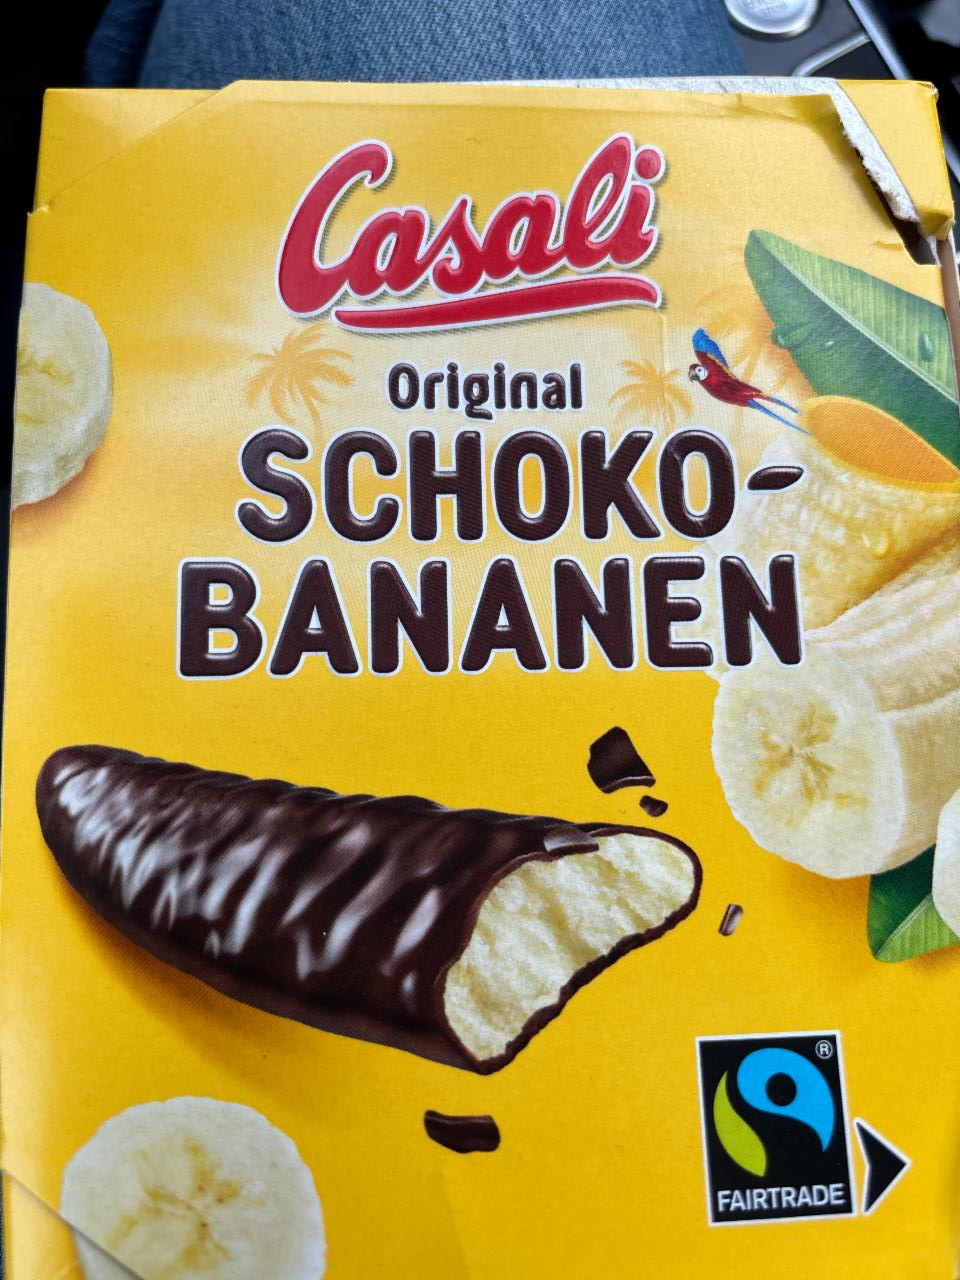 Képek - Original Schoko-Bananen Casali